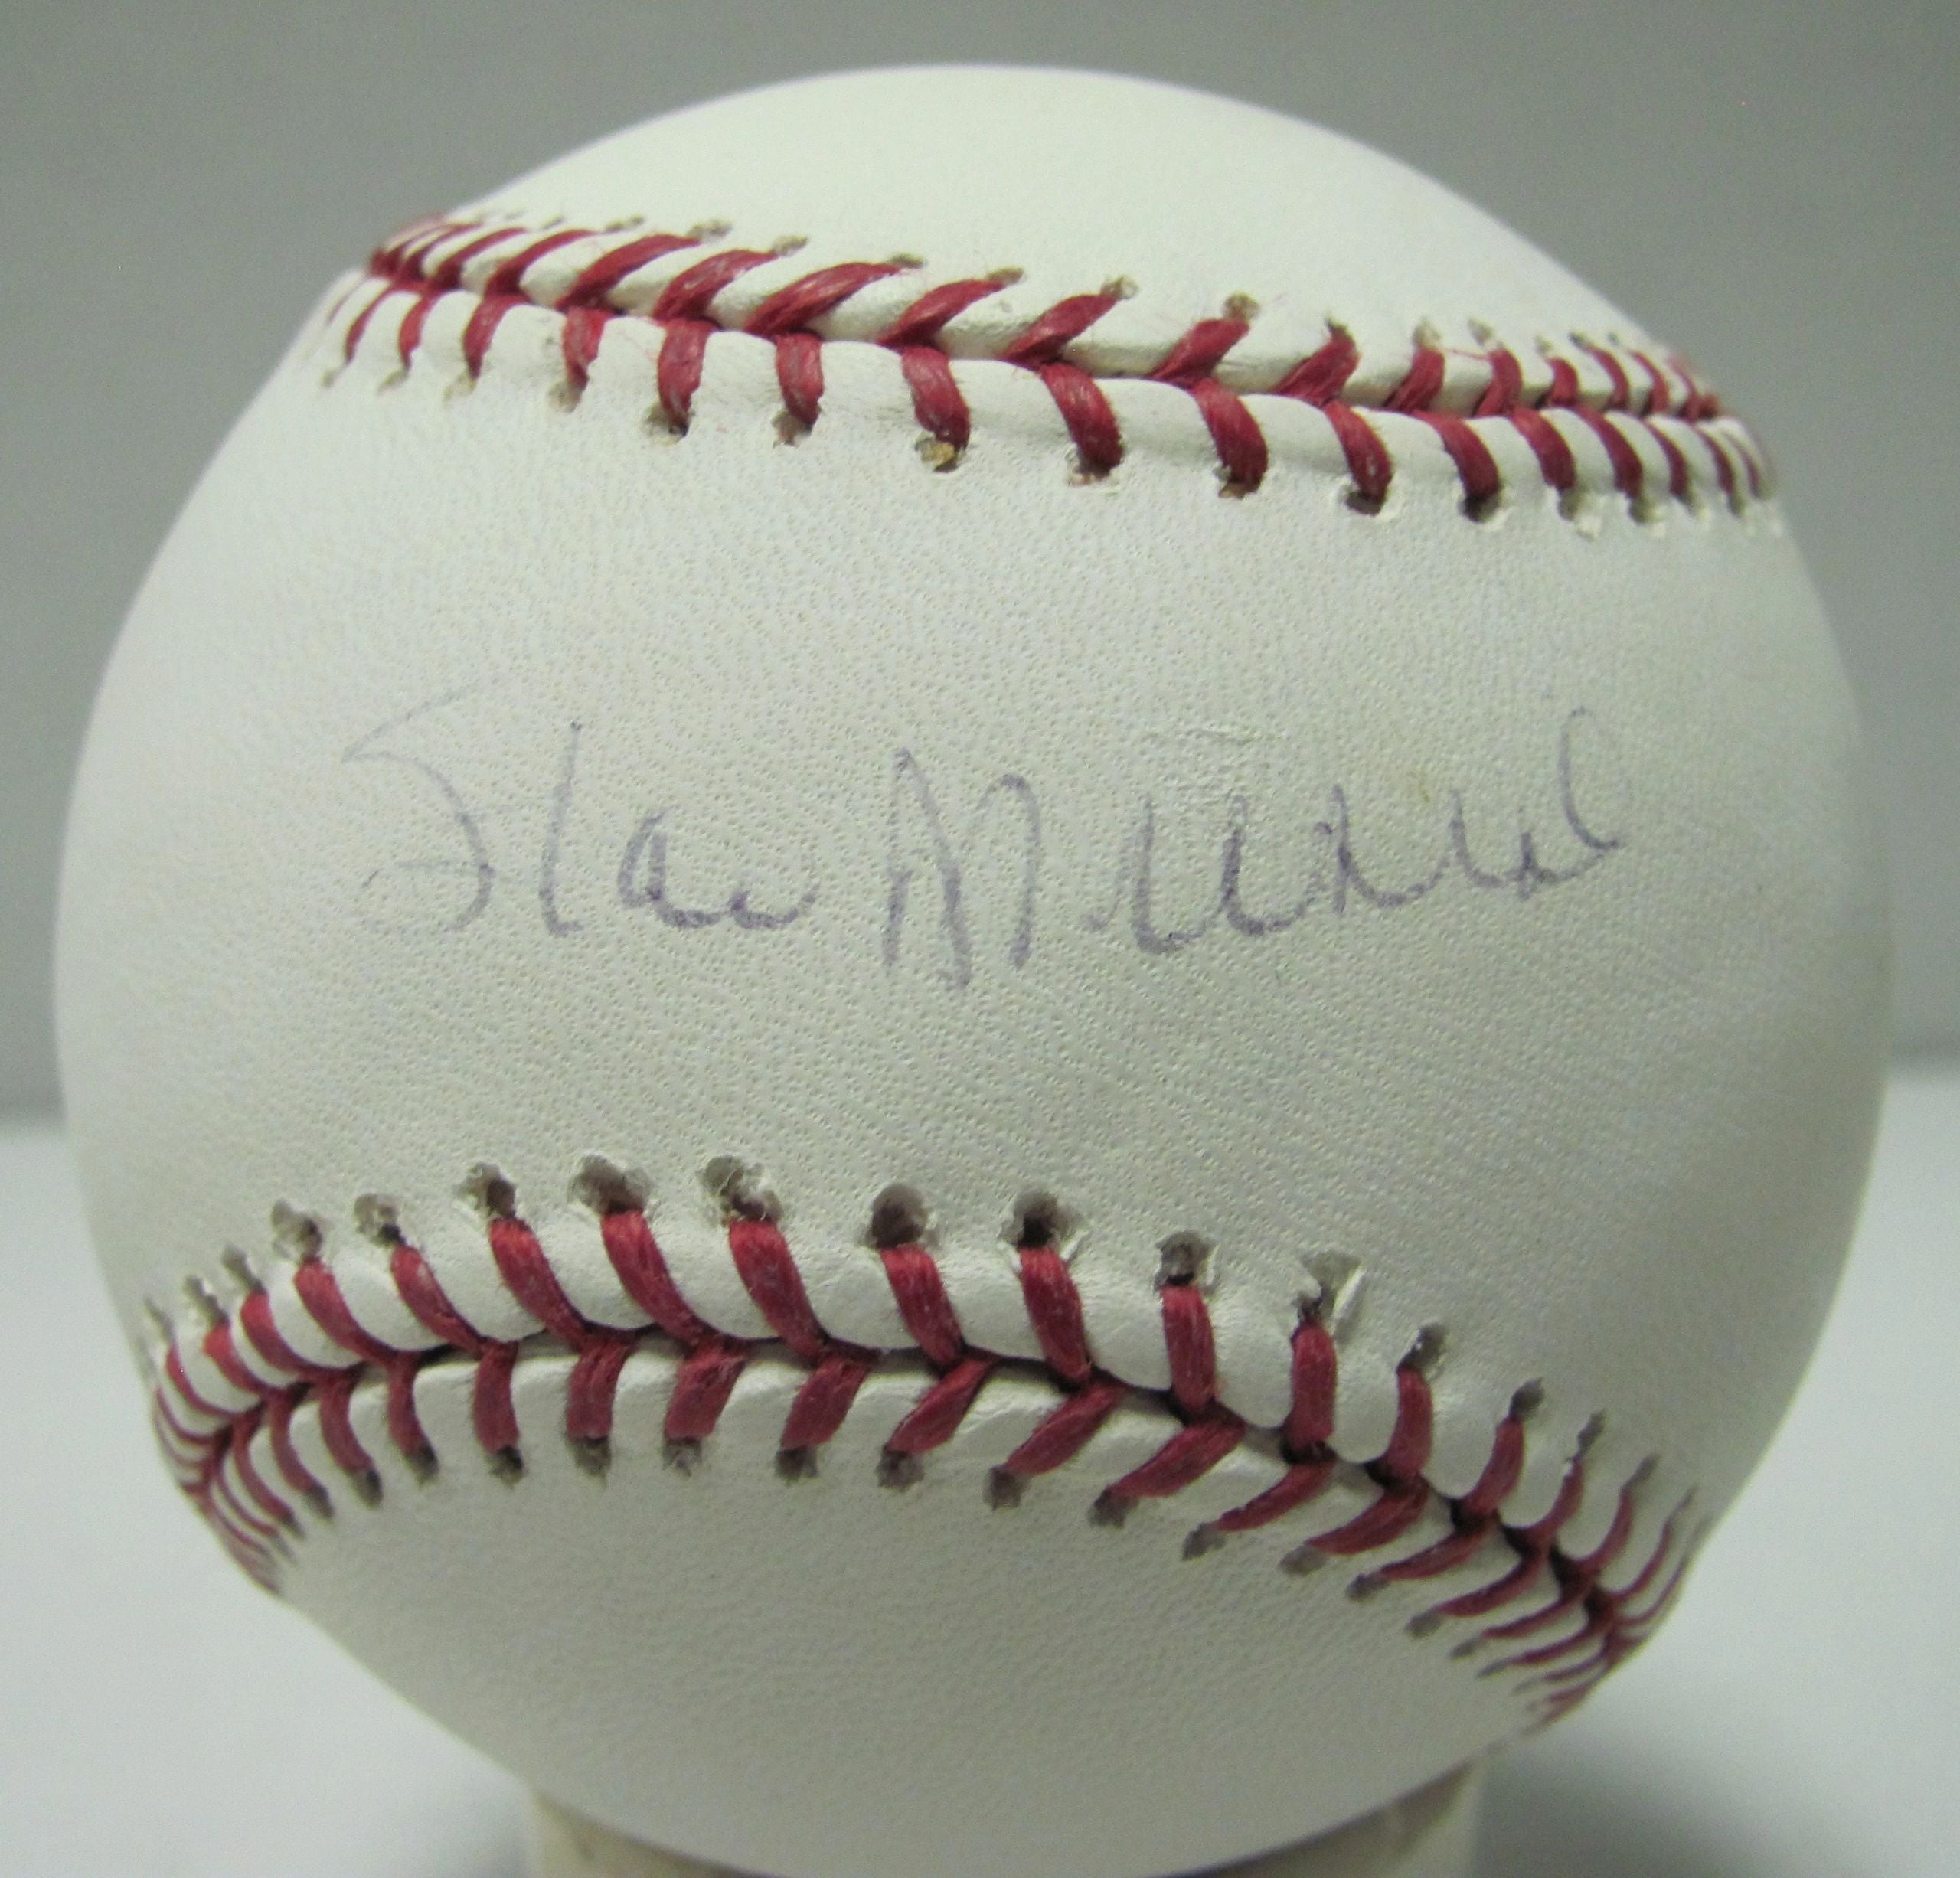 Stan Musial Signed Baseball - Official Major League Baseball Allen "Bud" Selig" W/JSA COA